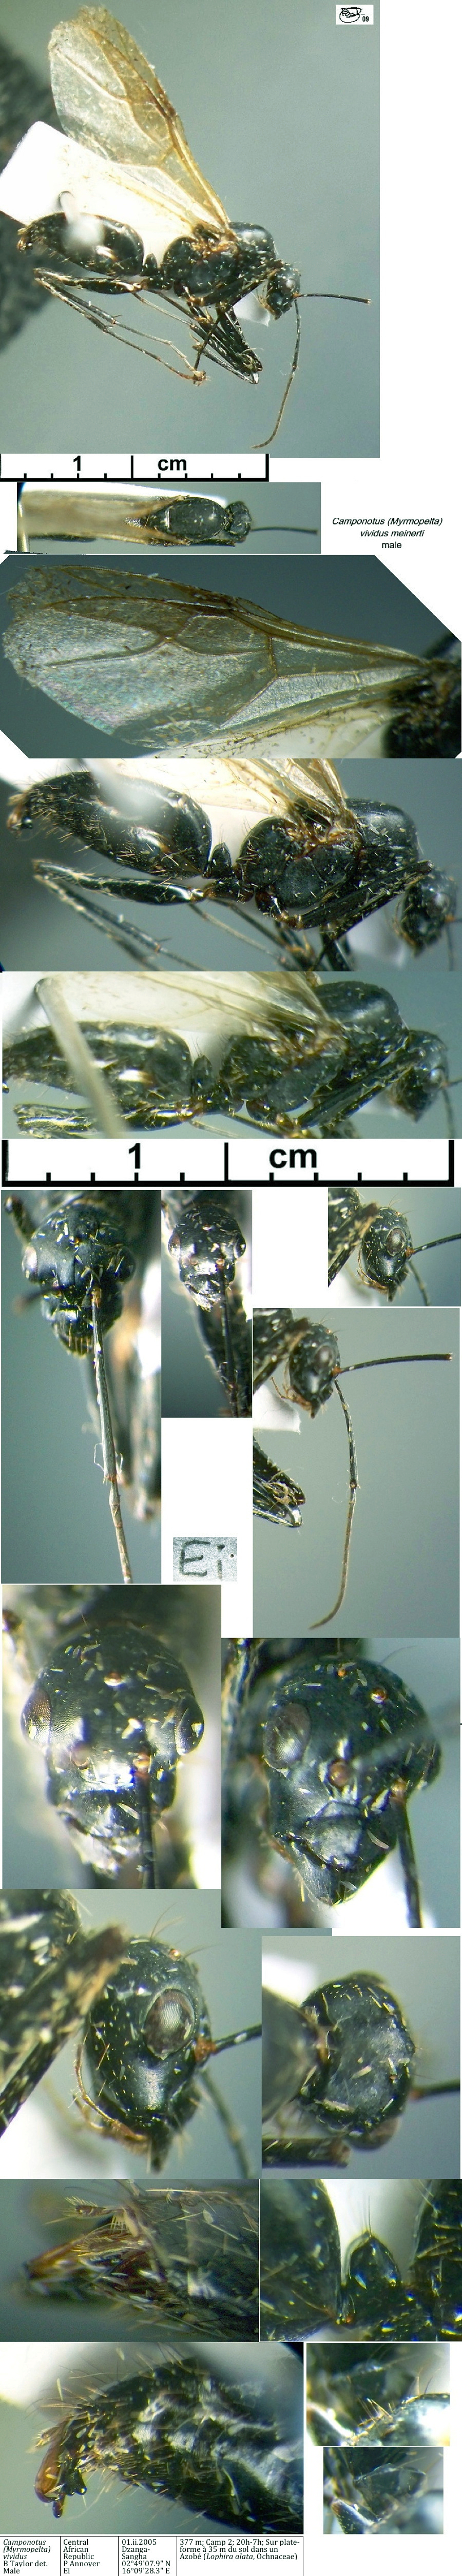 {Camponotus vividus male}